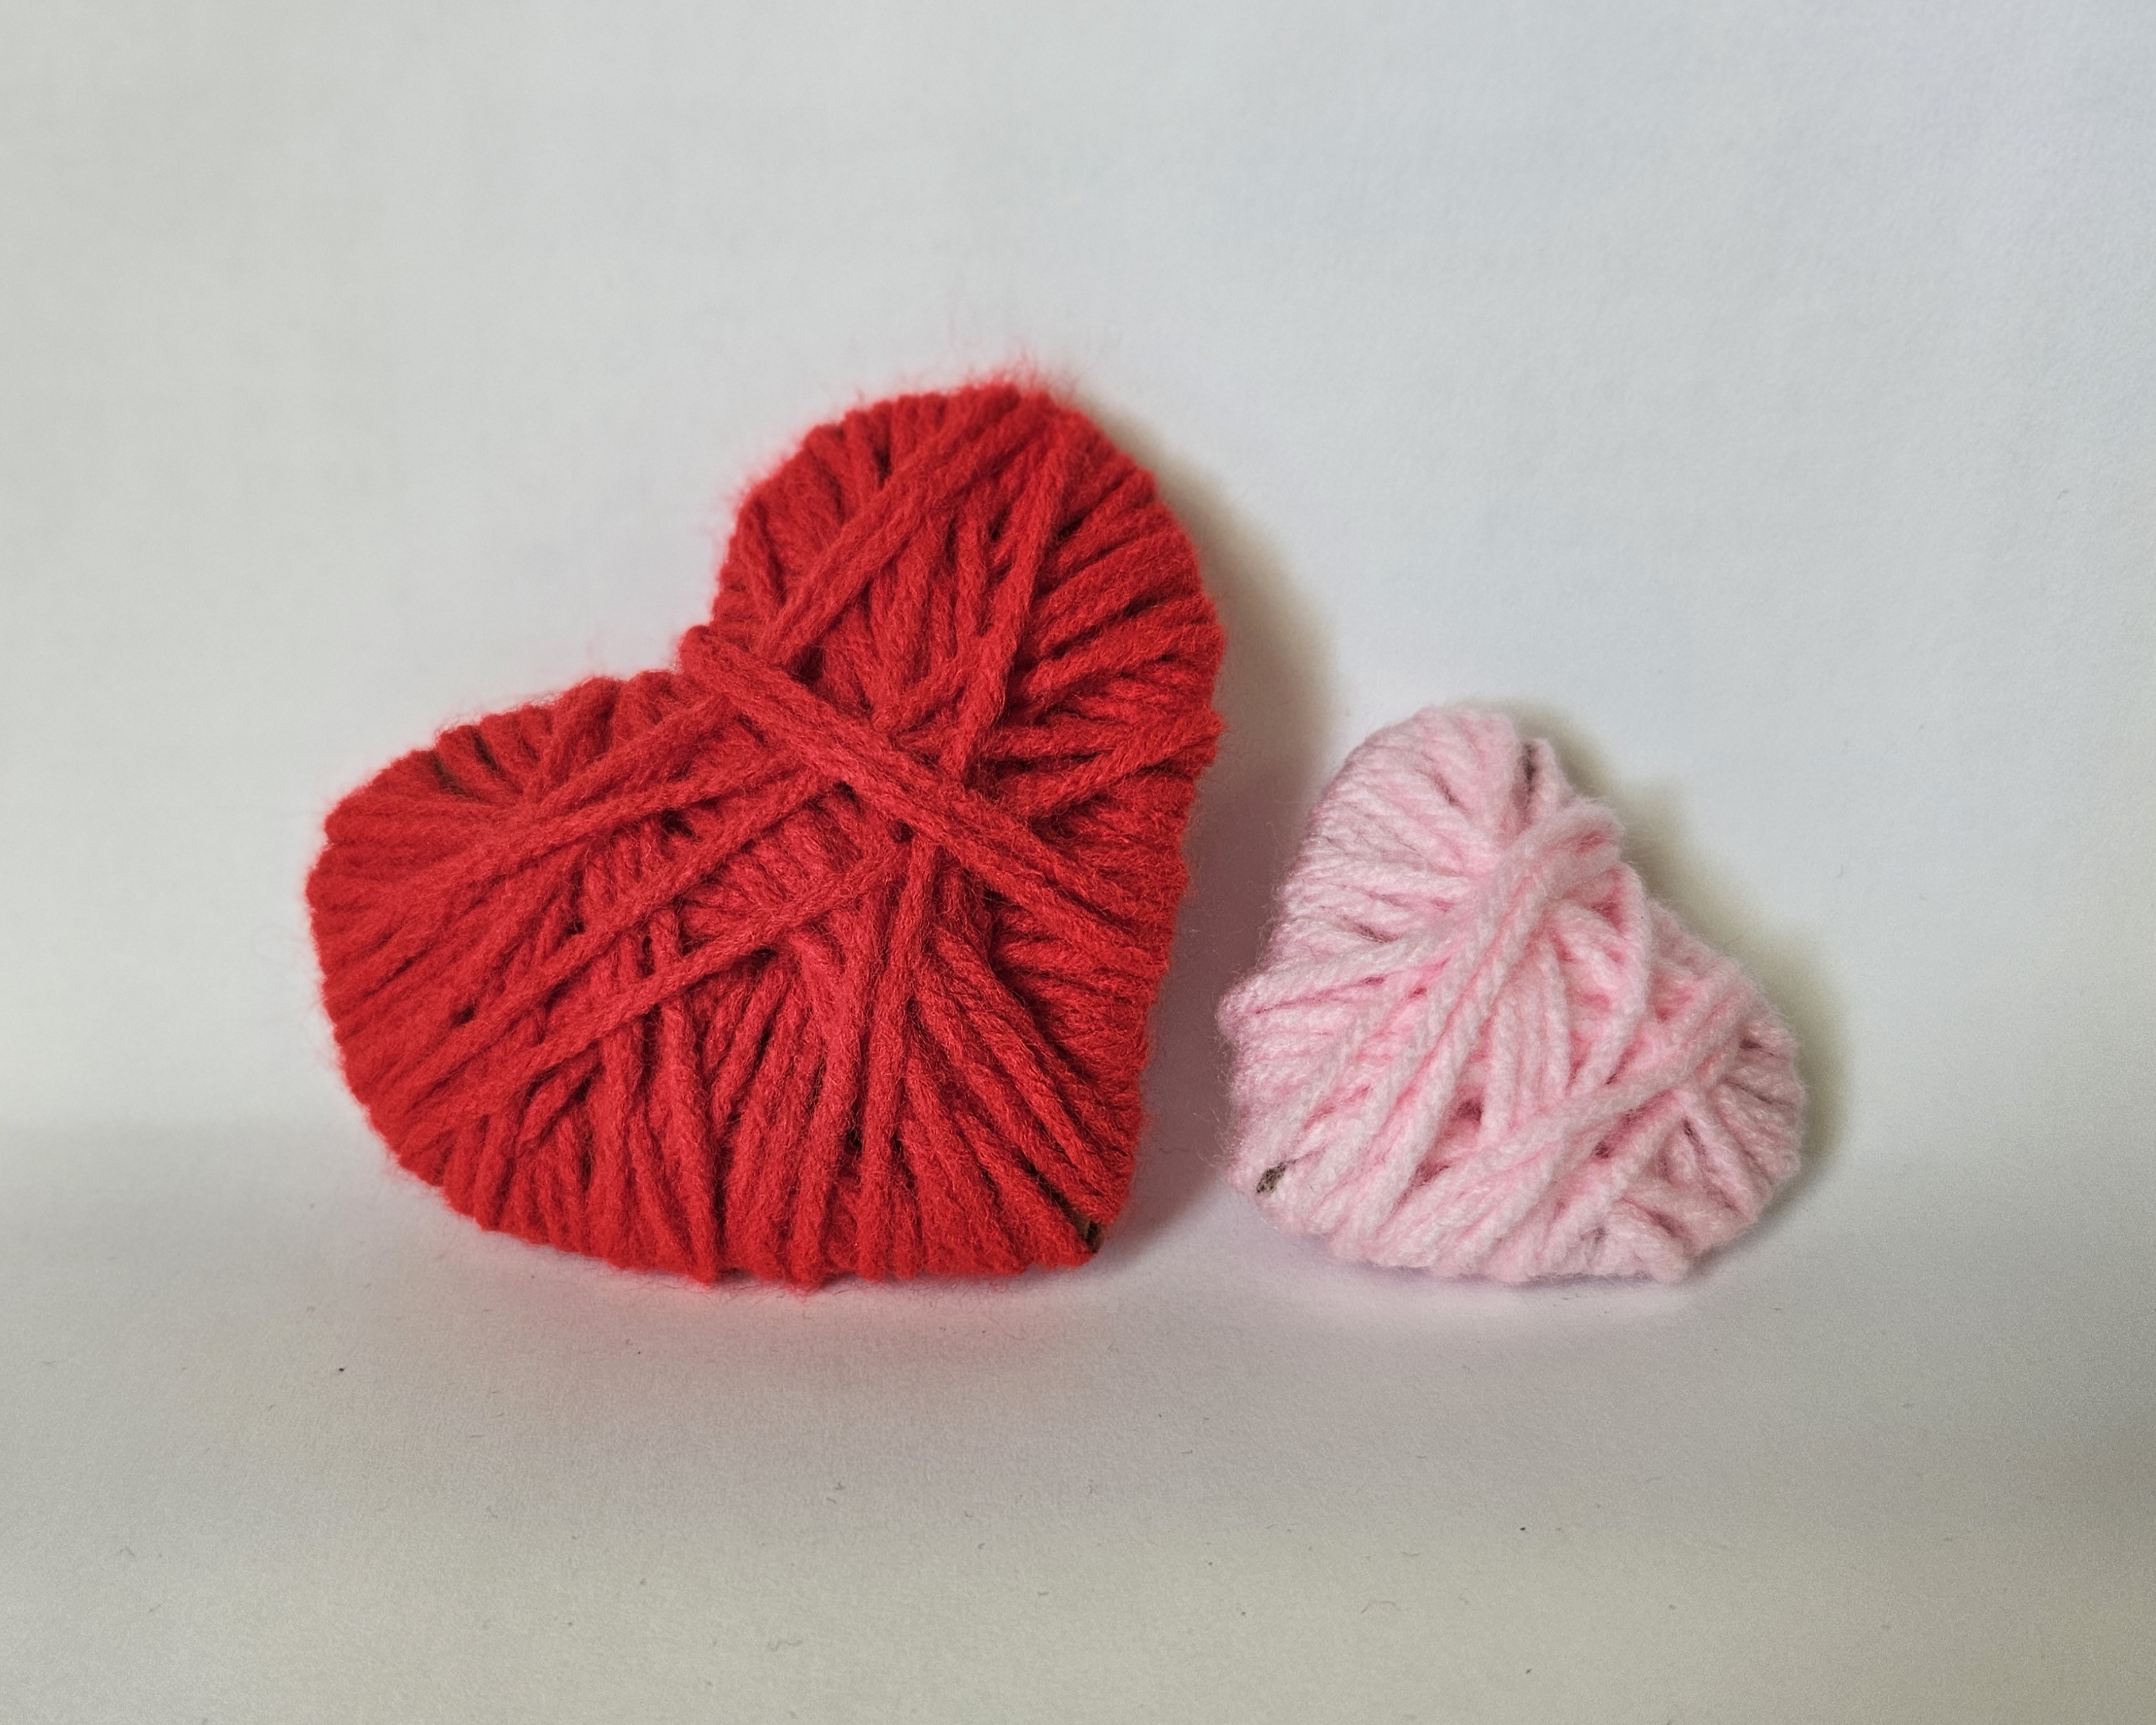 hearts made of yarn